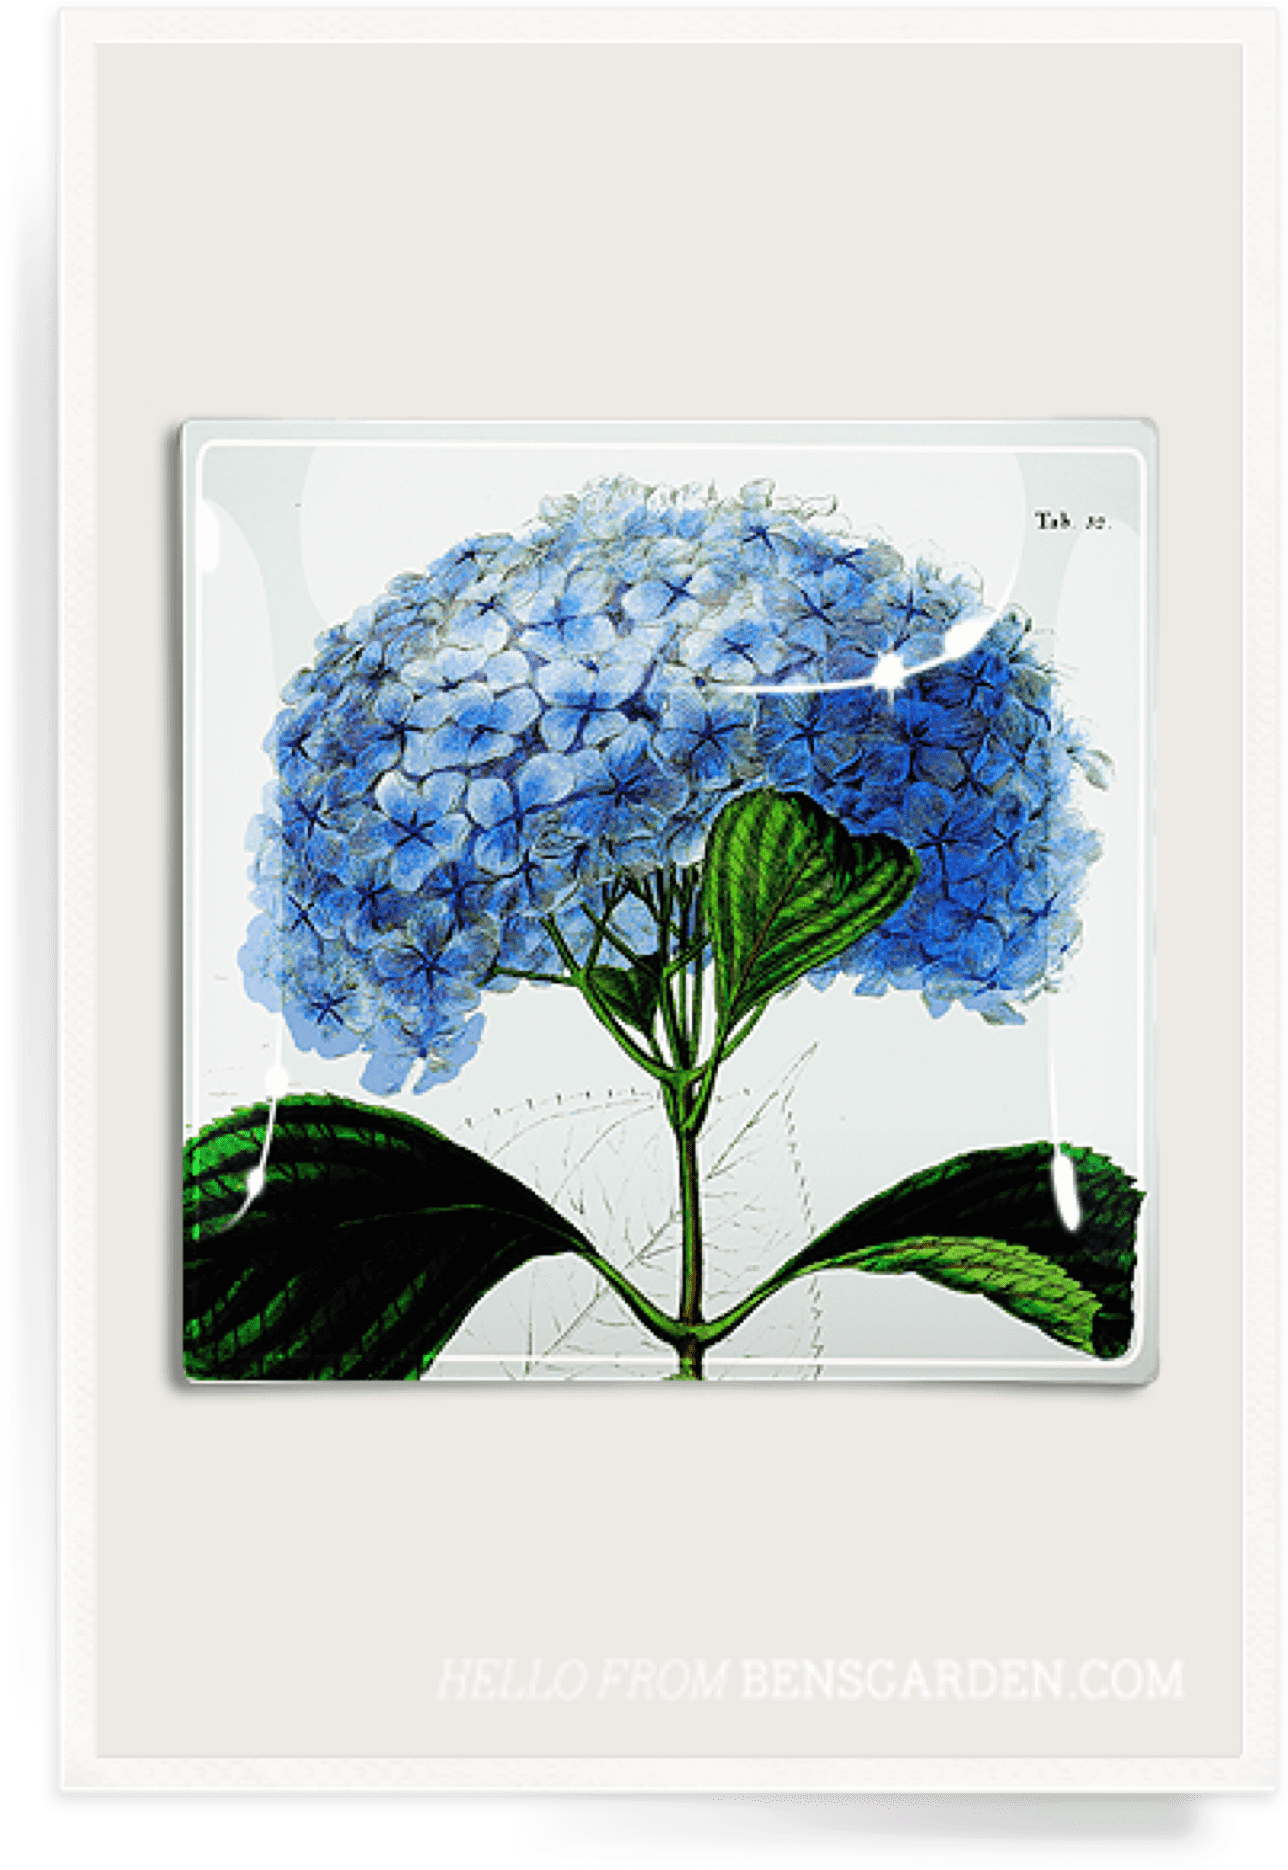 Blue Hydrangea Illustration PNG